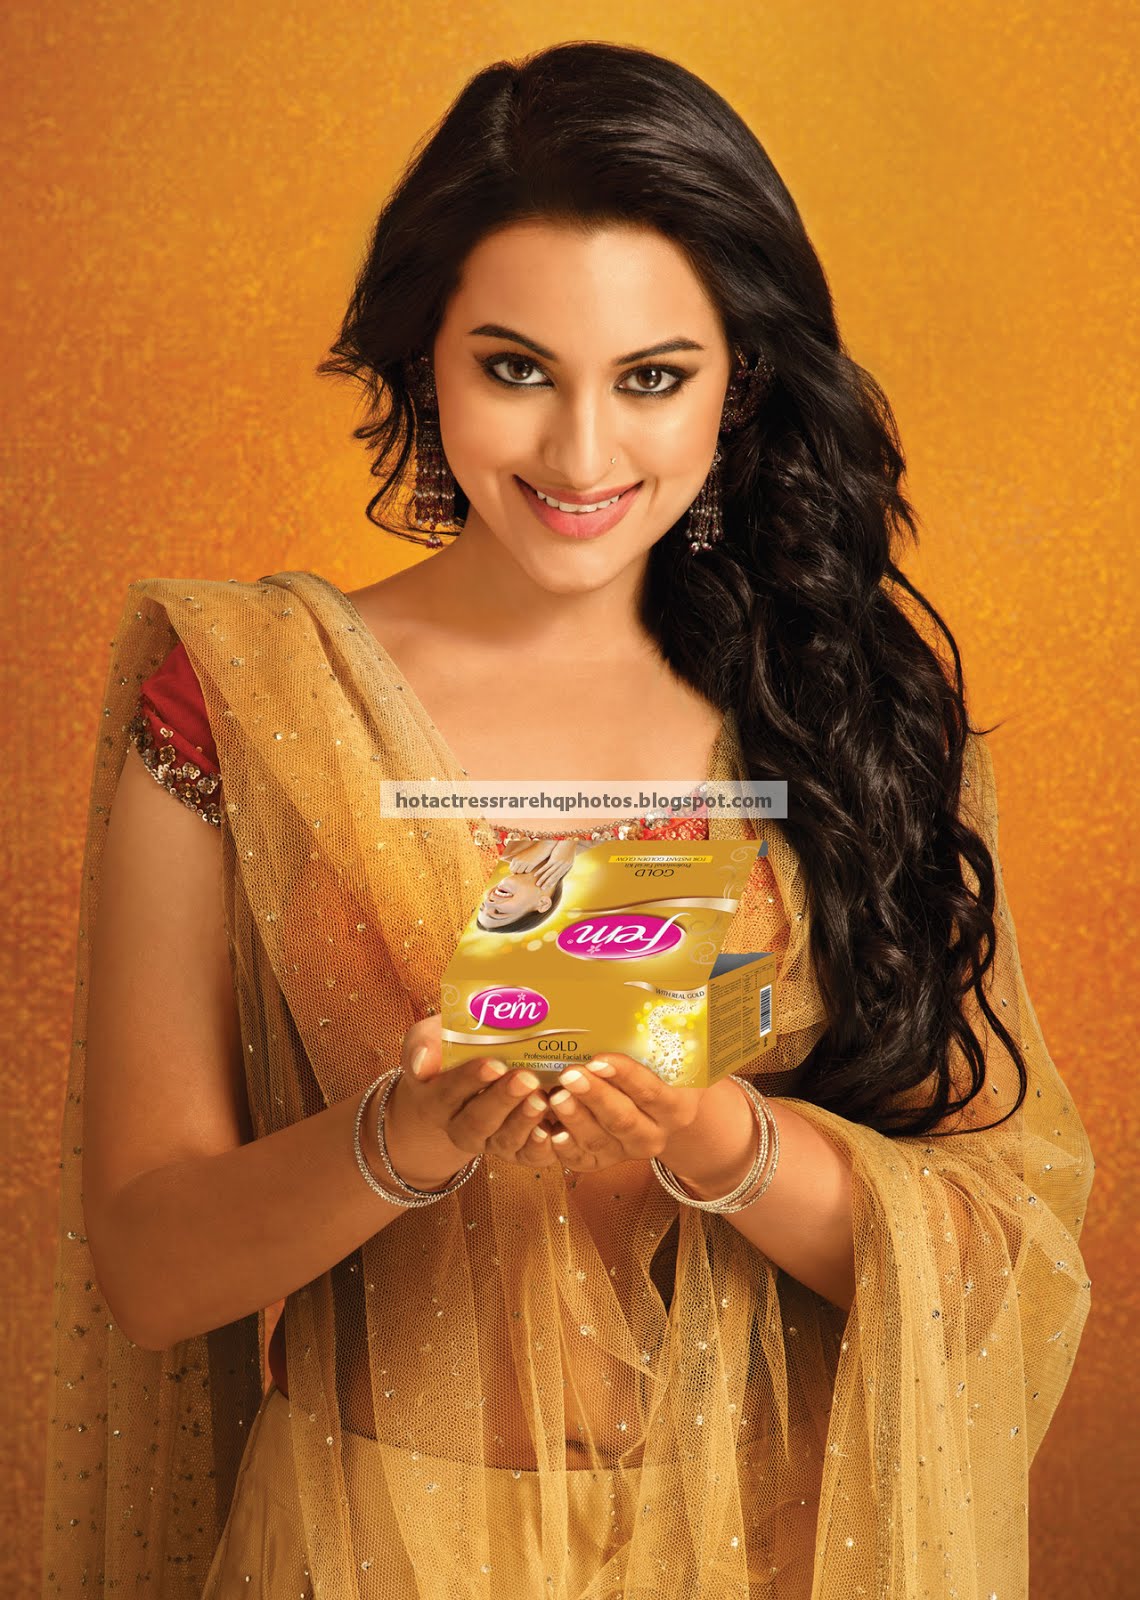 Hot Indian Actress Rare HQ Photos: Bollywood Beauty ...